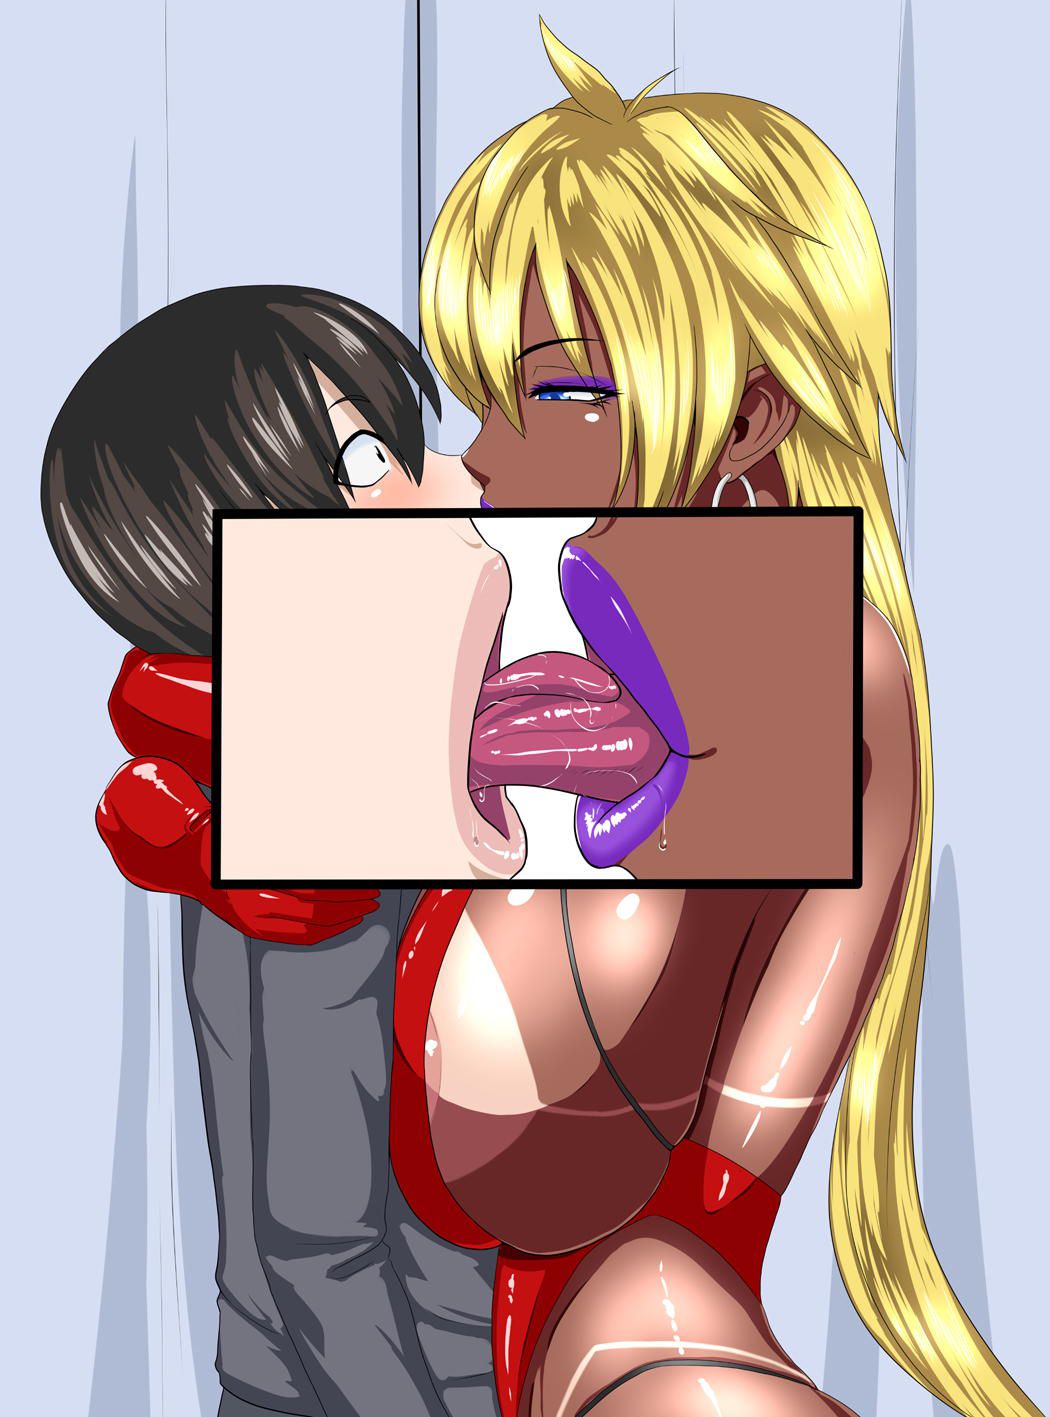 Secondary fetish image of kiss deep kiss. 8